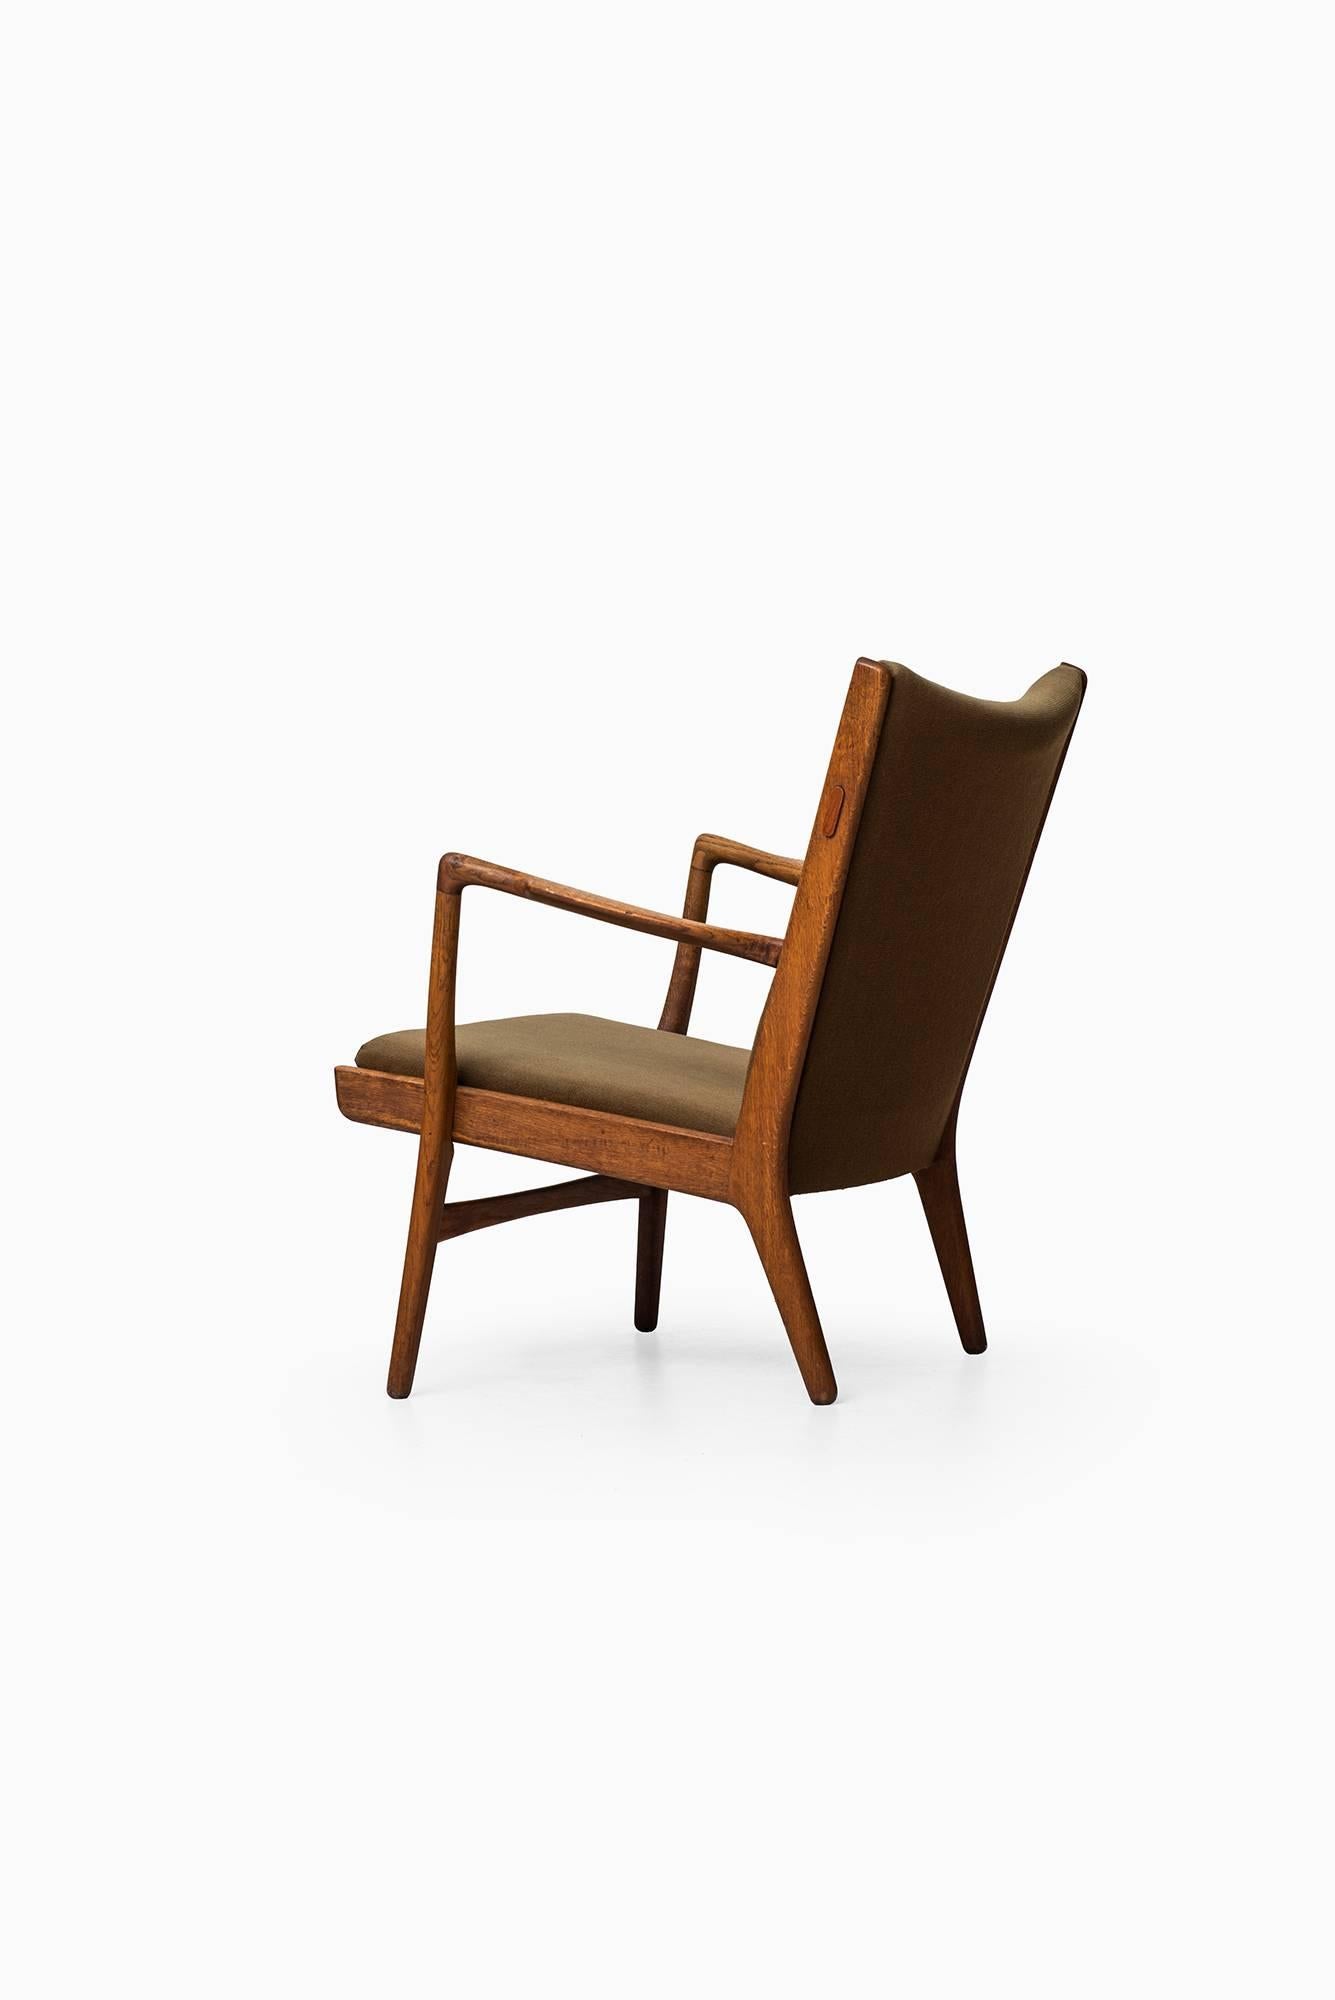 Hans Wegner Easy Chair Model AP-16 by AP-Stolen in Denmark In Good Condition For Sale In Limhamn, Skåne län